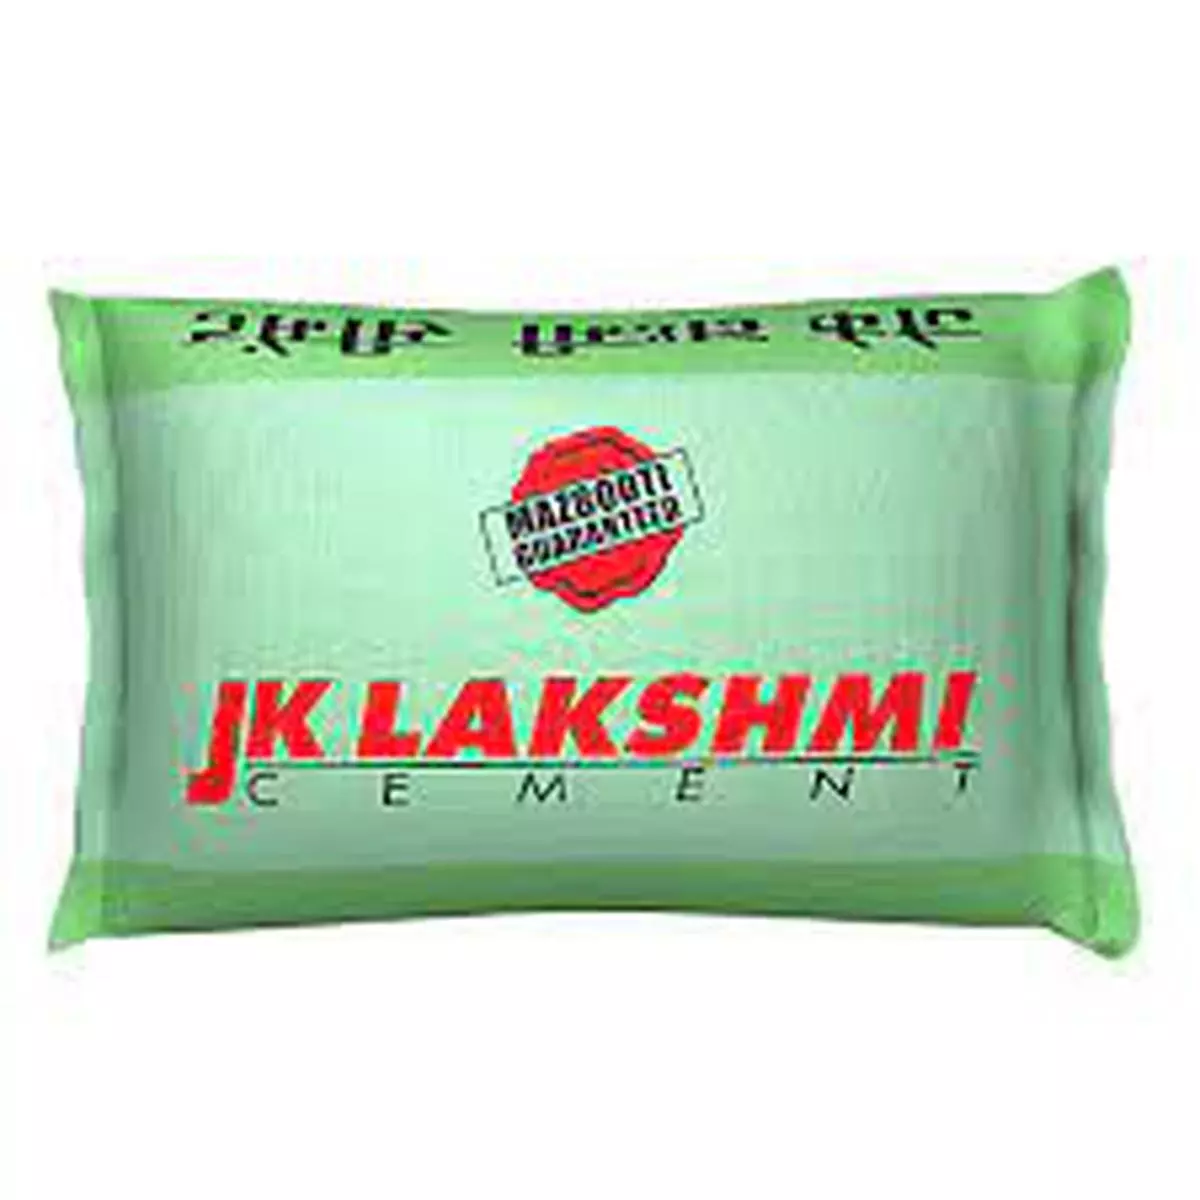 Share of JK Lakshmi Cement Ltd settled at ₹442.95 apiece on BSE.